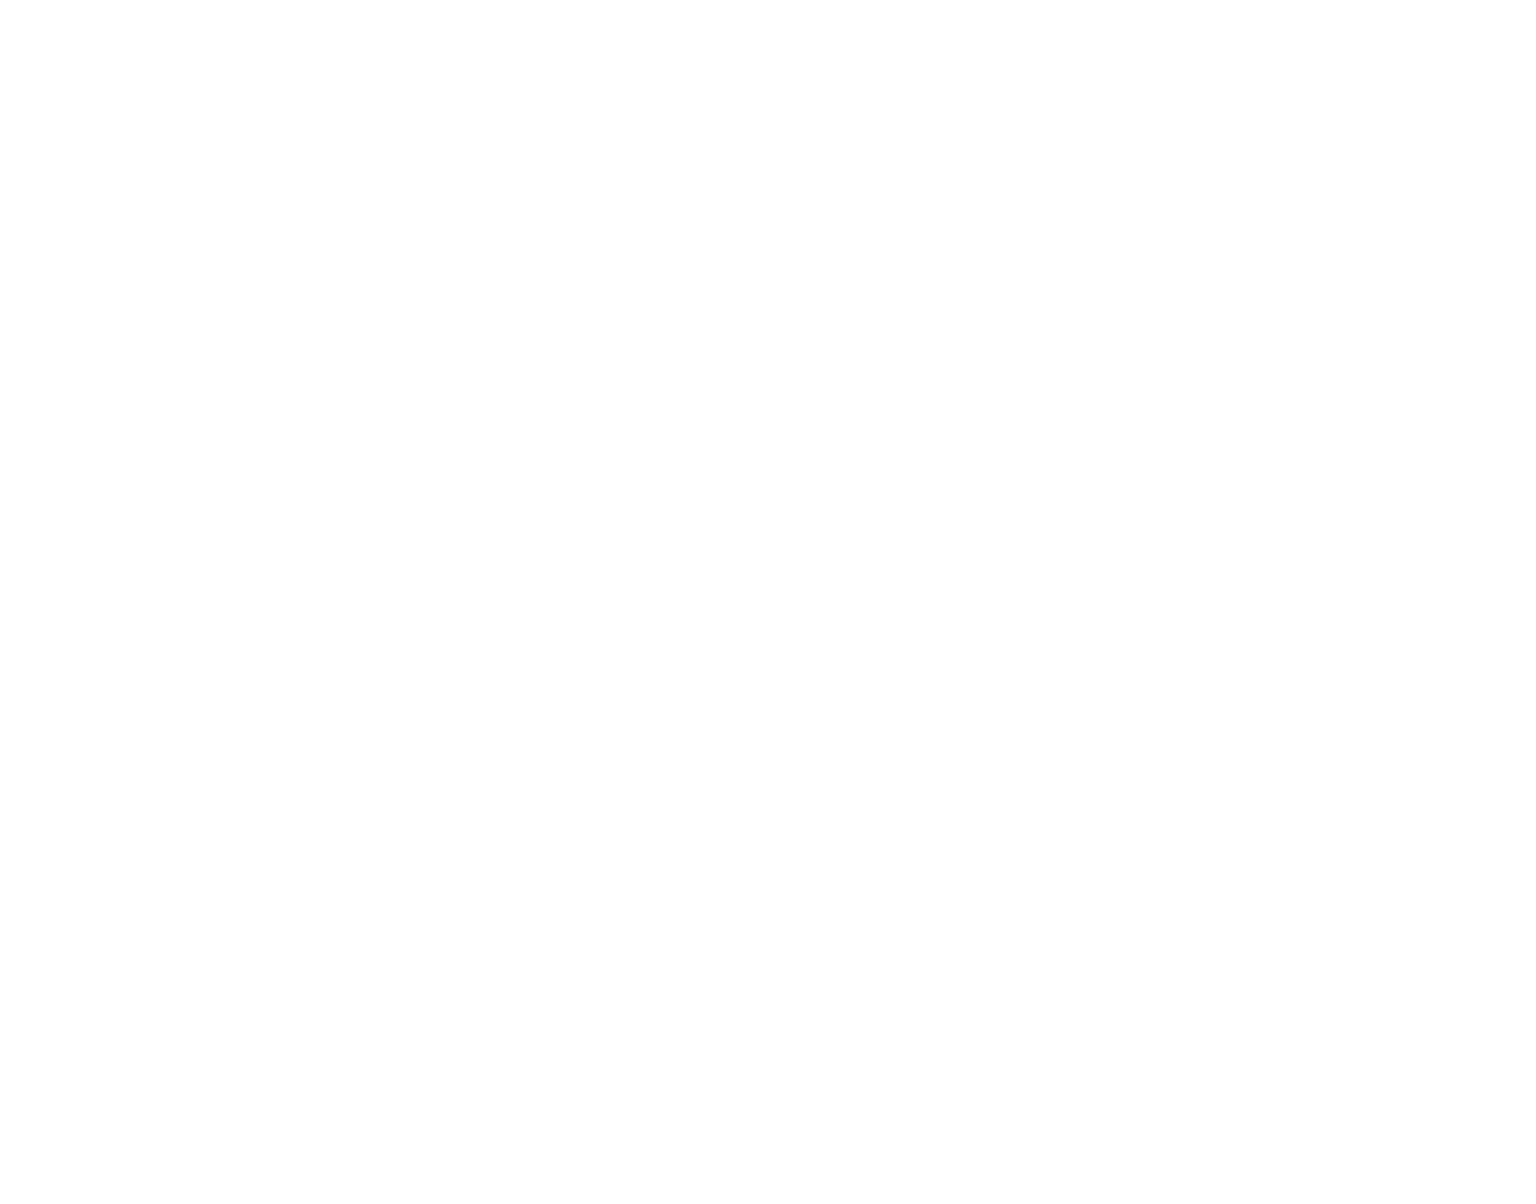 La Laguna Gran Hotel logo en blanco